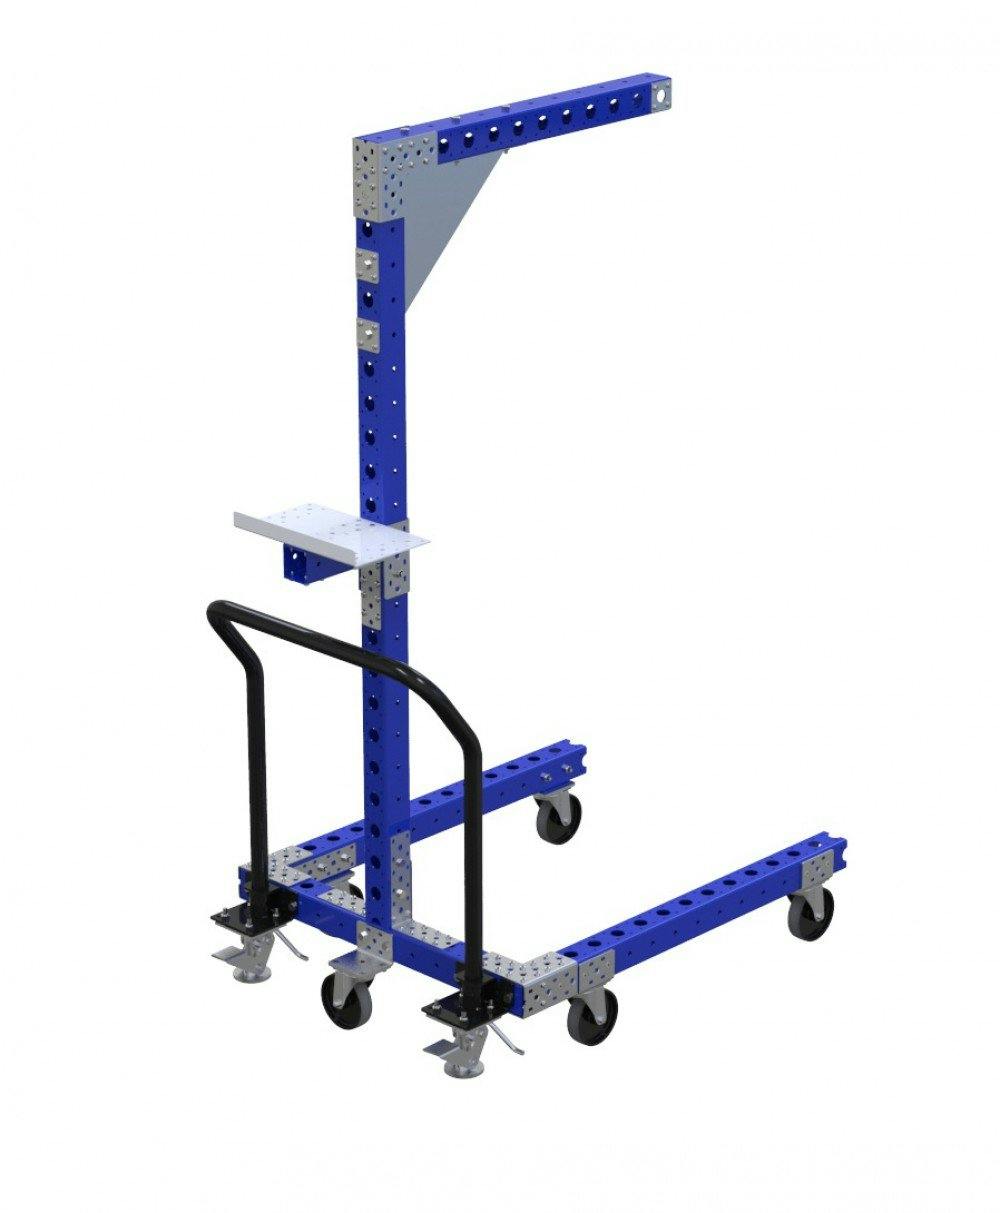 Industrial tool balancer cart by FlexQube